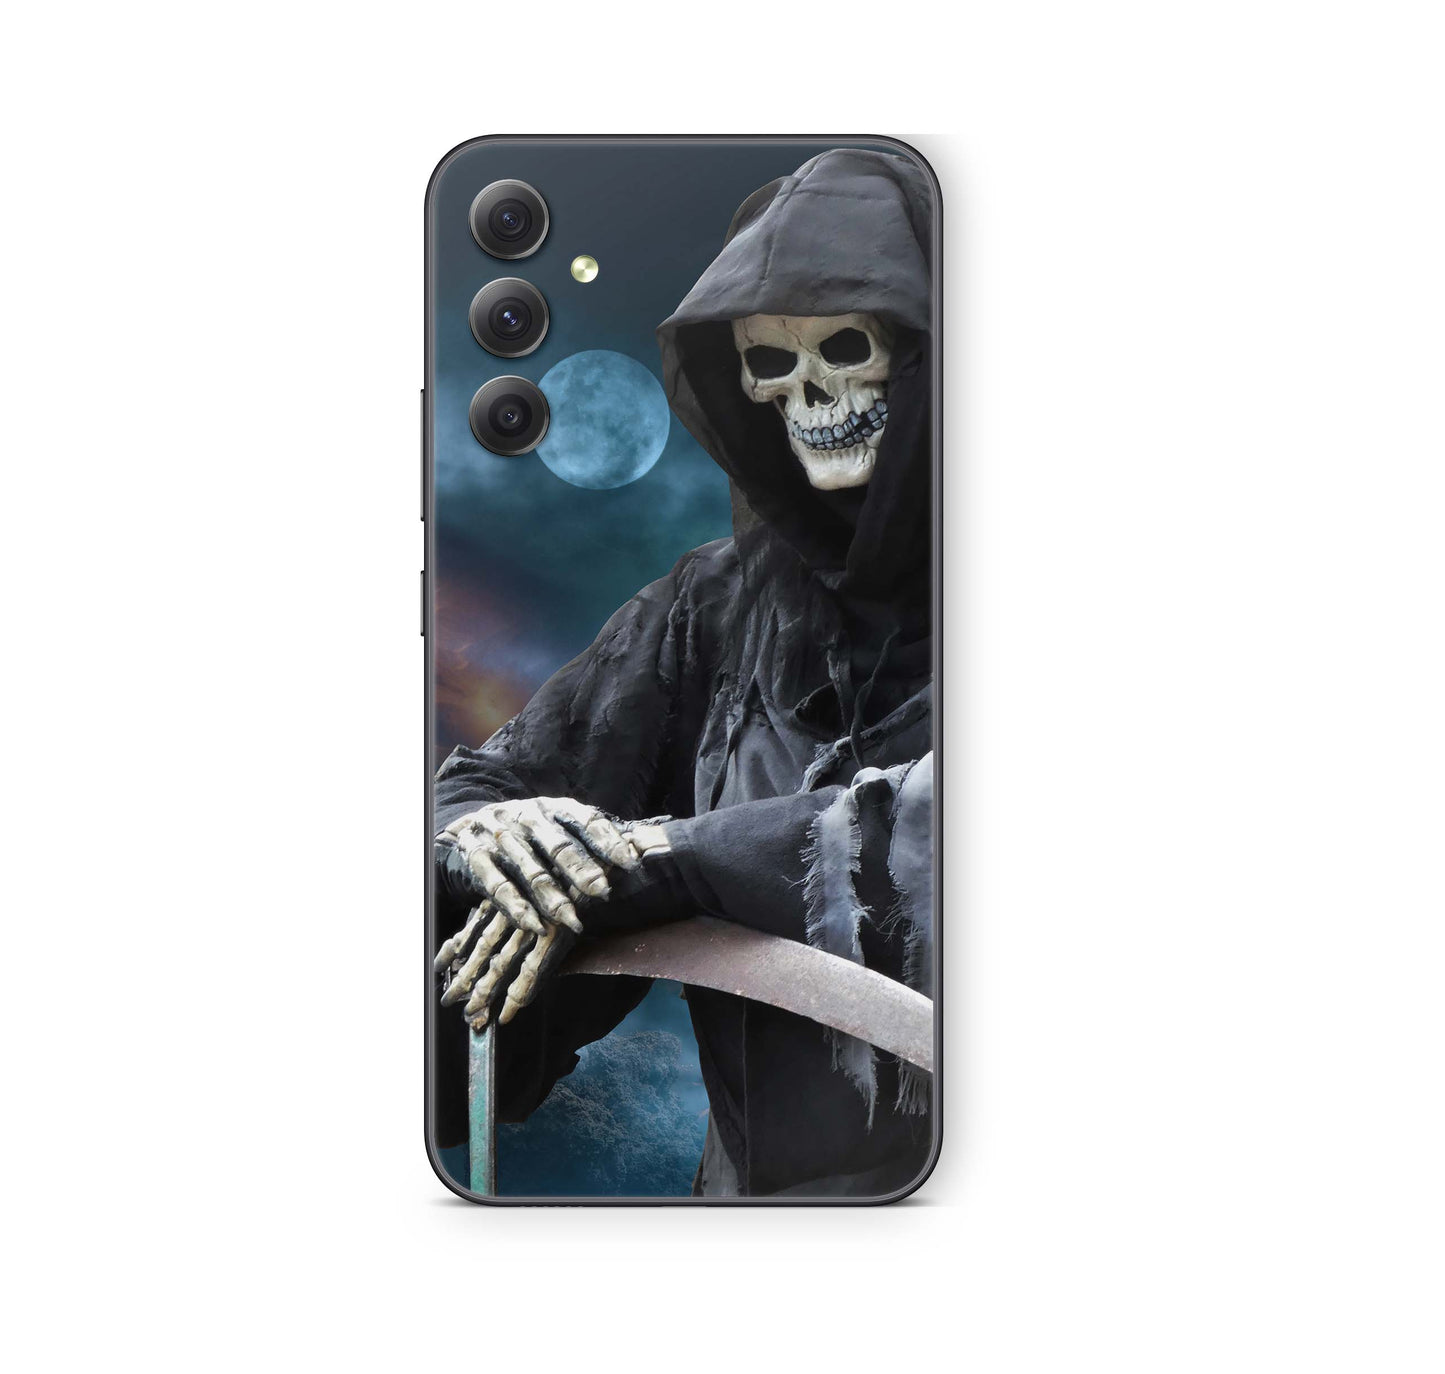 Samsung Galaxy A52 Skin Schutzfolie Aufkleber Skins Design Reaper Elektronik-Sticker & -Aufkleber skins4u   